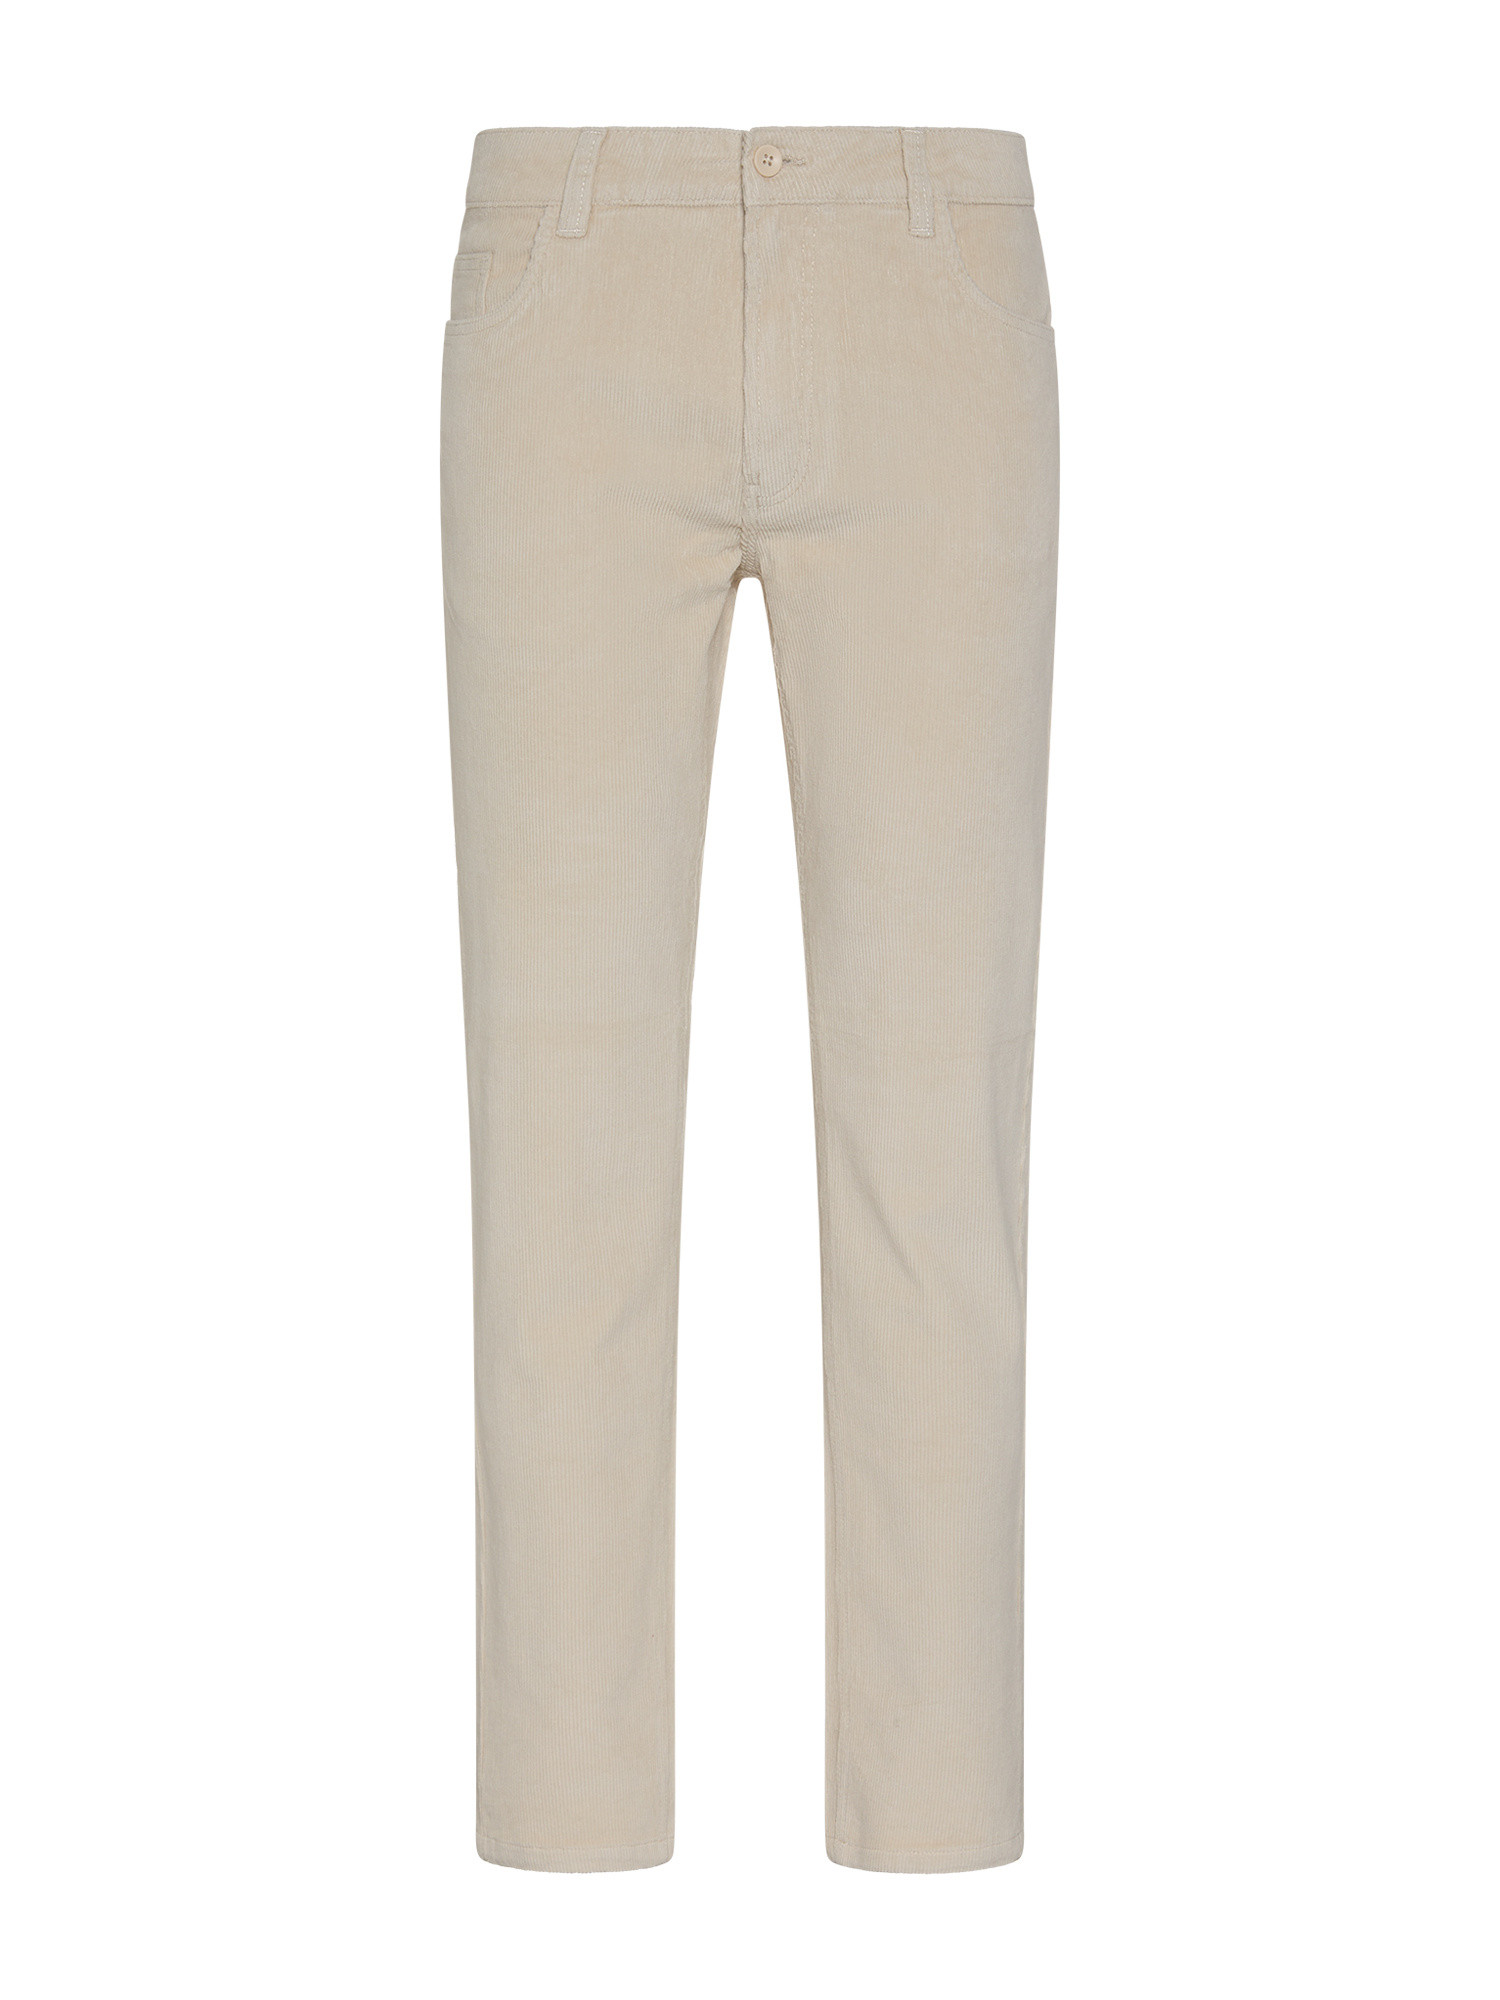 JCT - Pantaloni slim fit in velluto, Bianco panna, large image number 0